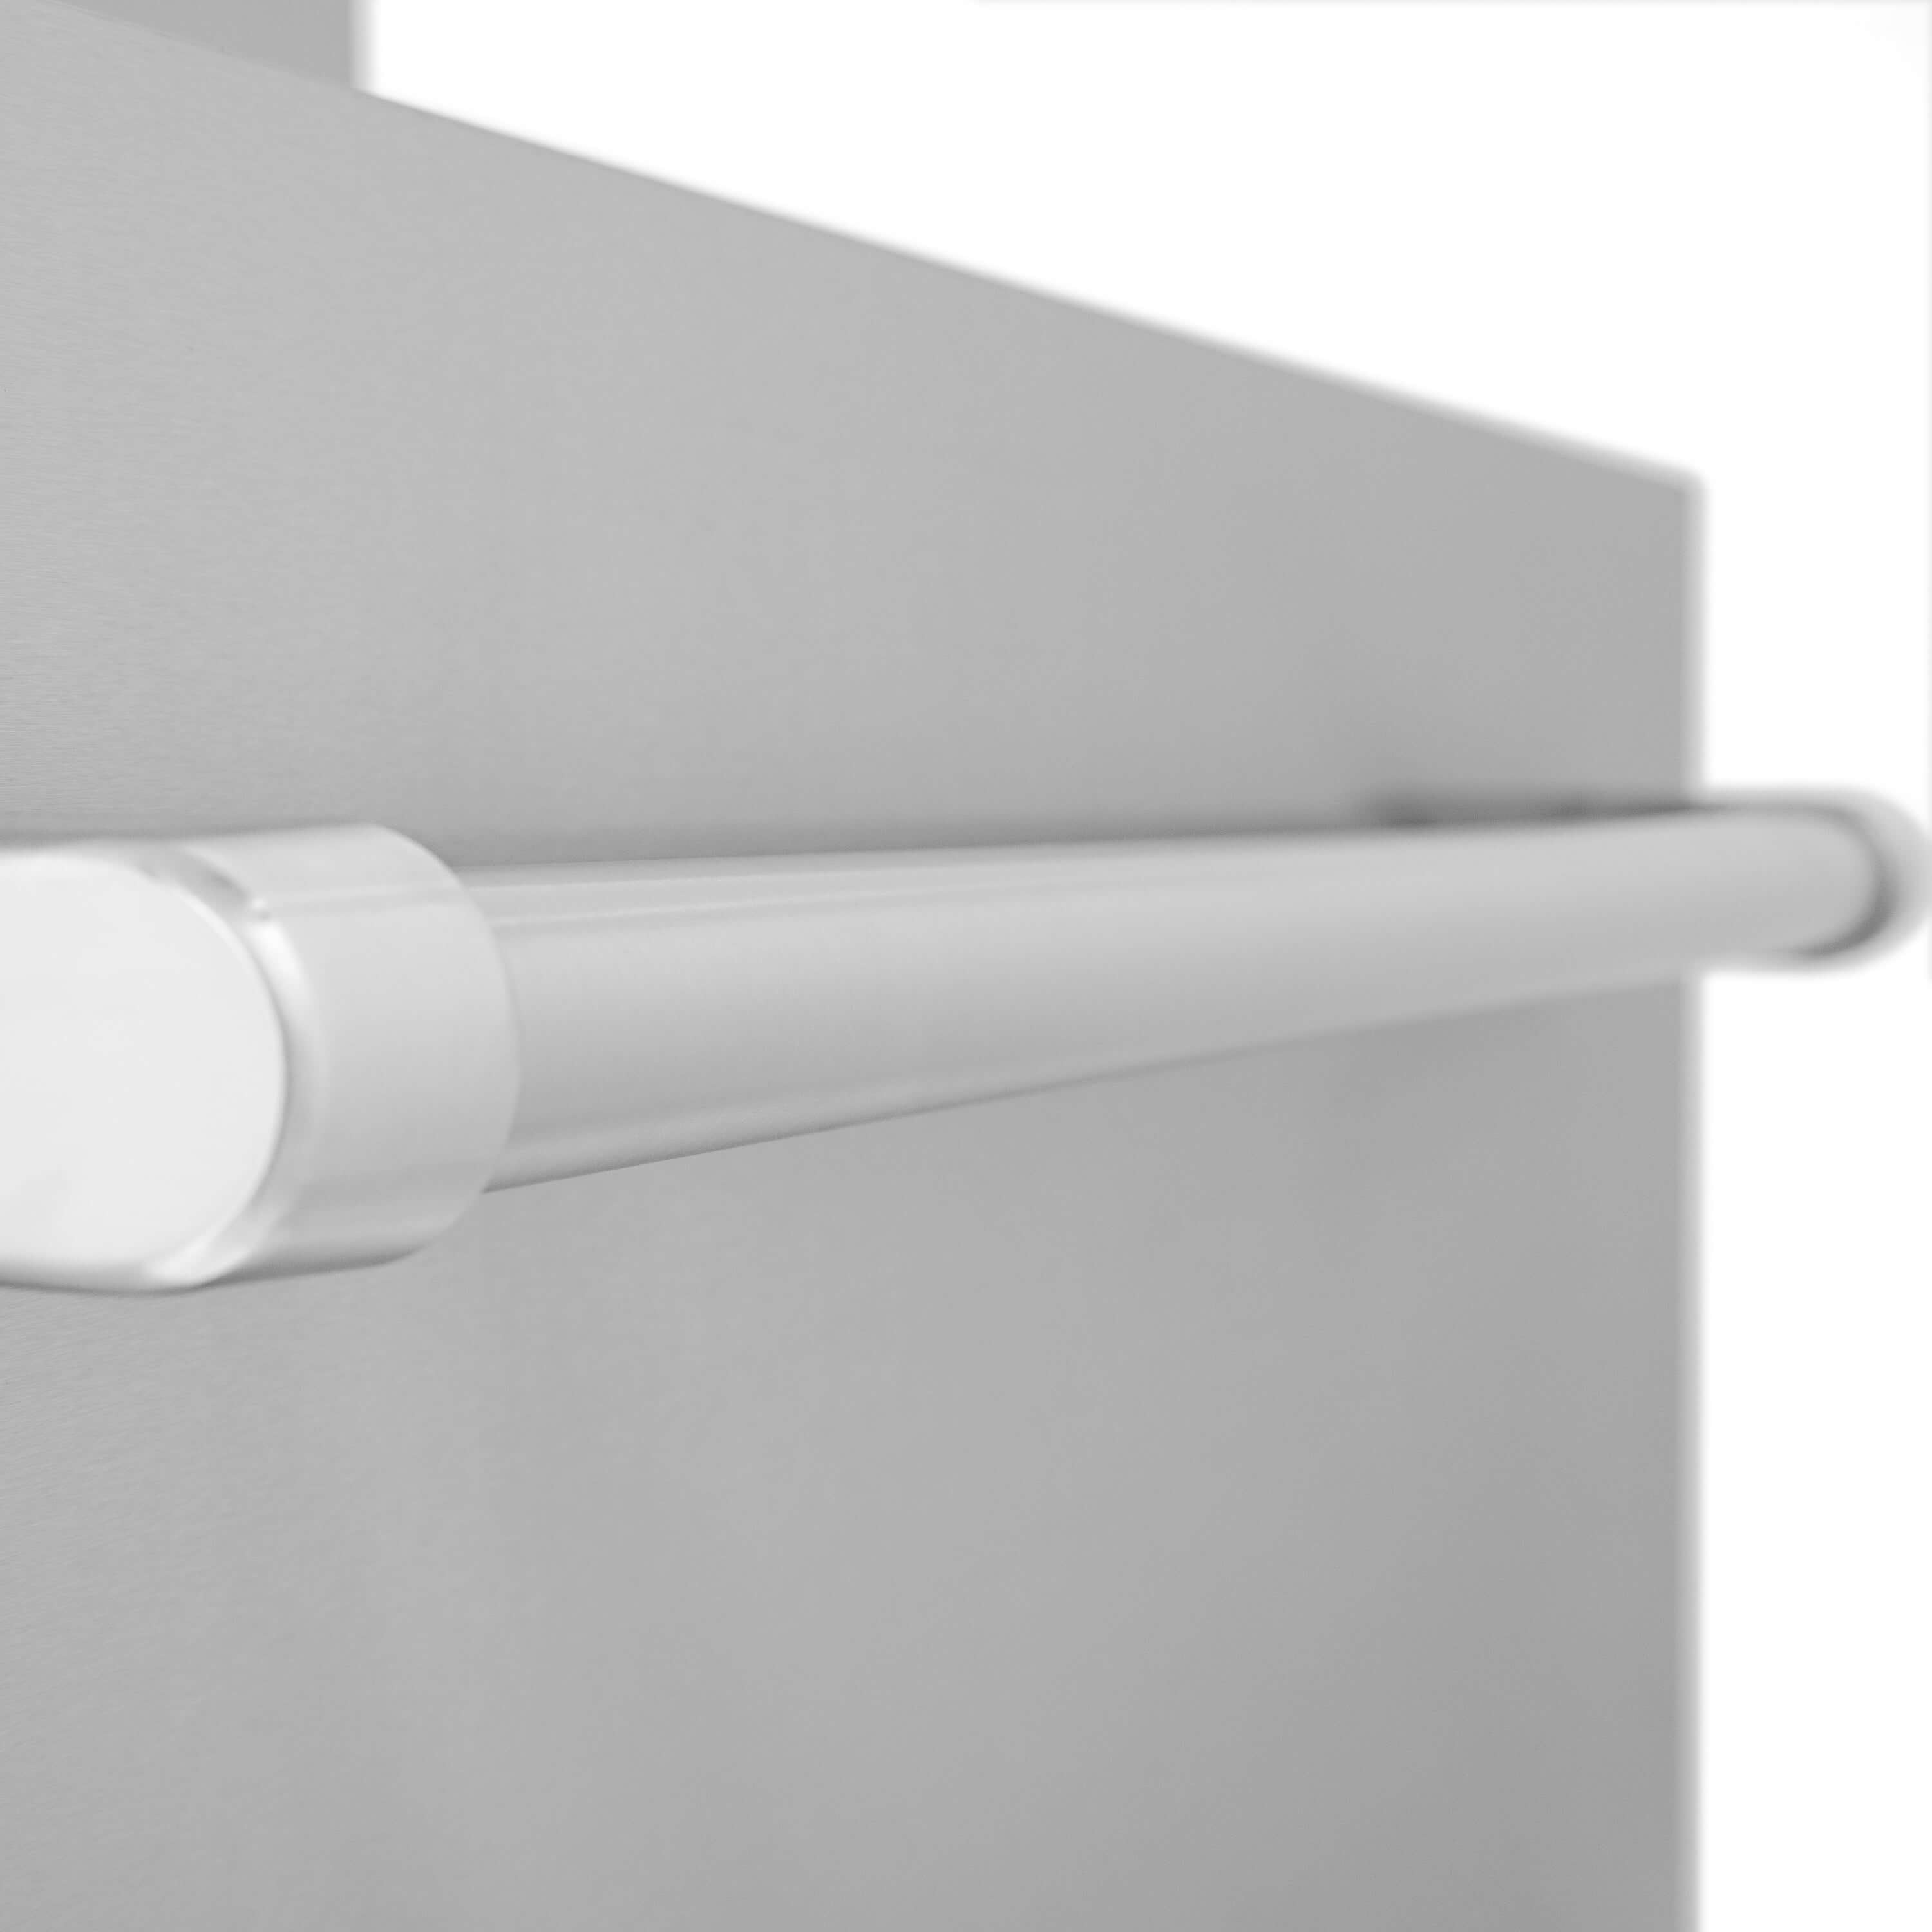 Bottom freezer compartment handle on ZLINE built-in refrigerator.